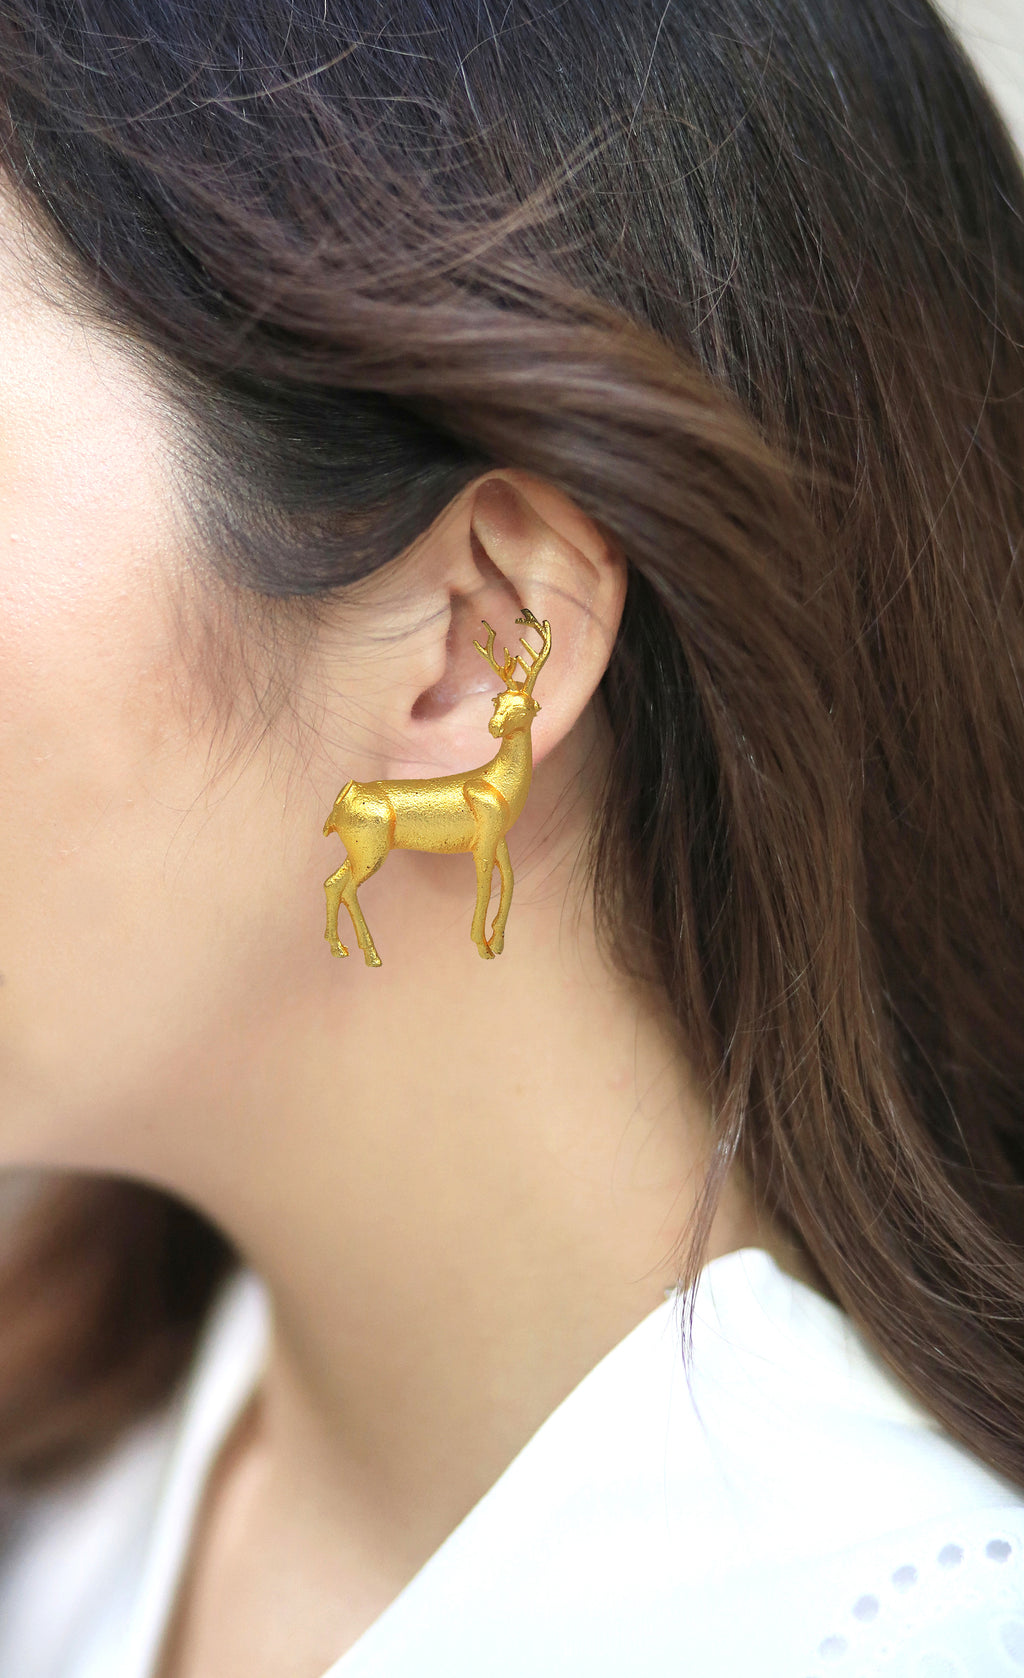 Deer Earrings - Statement Earrings - Gold-Plated & Hypoallergenic - Made in India - Dubai Jewellery - Dori